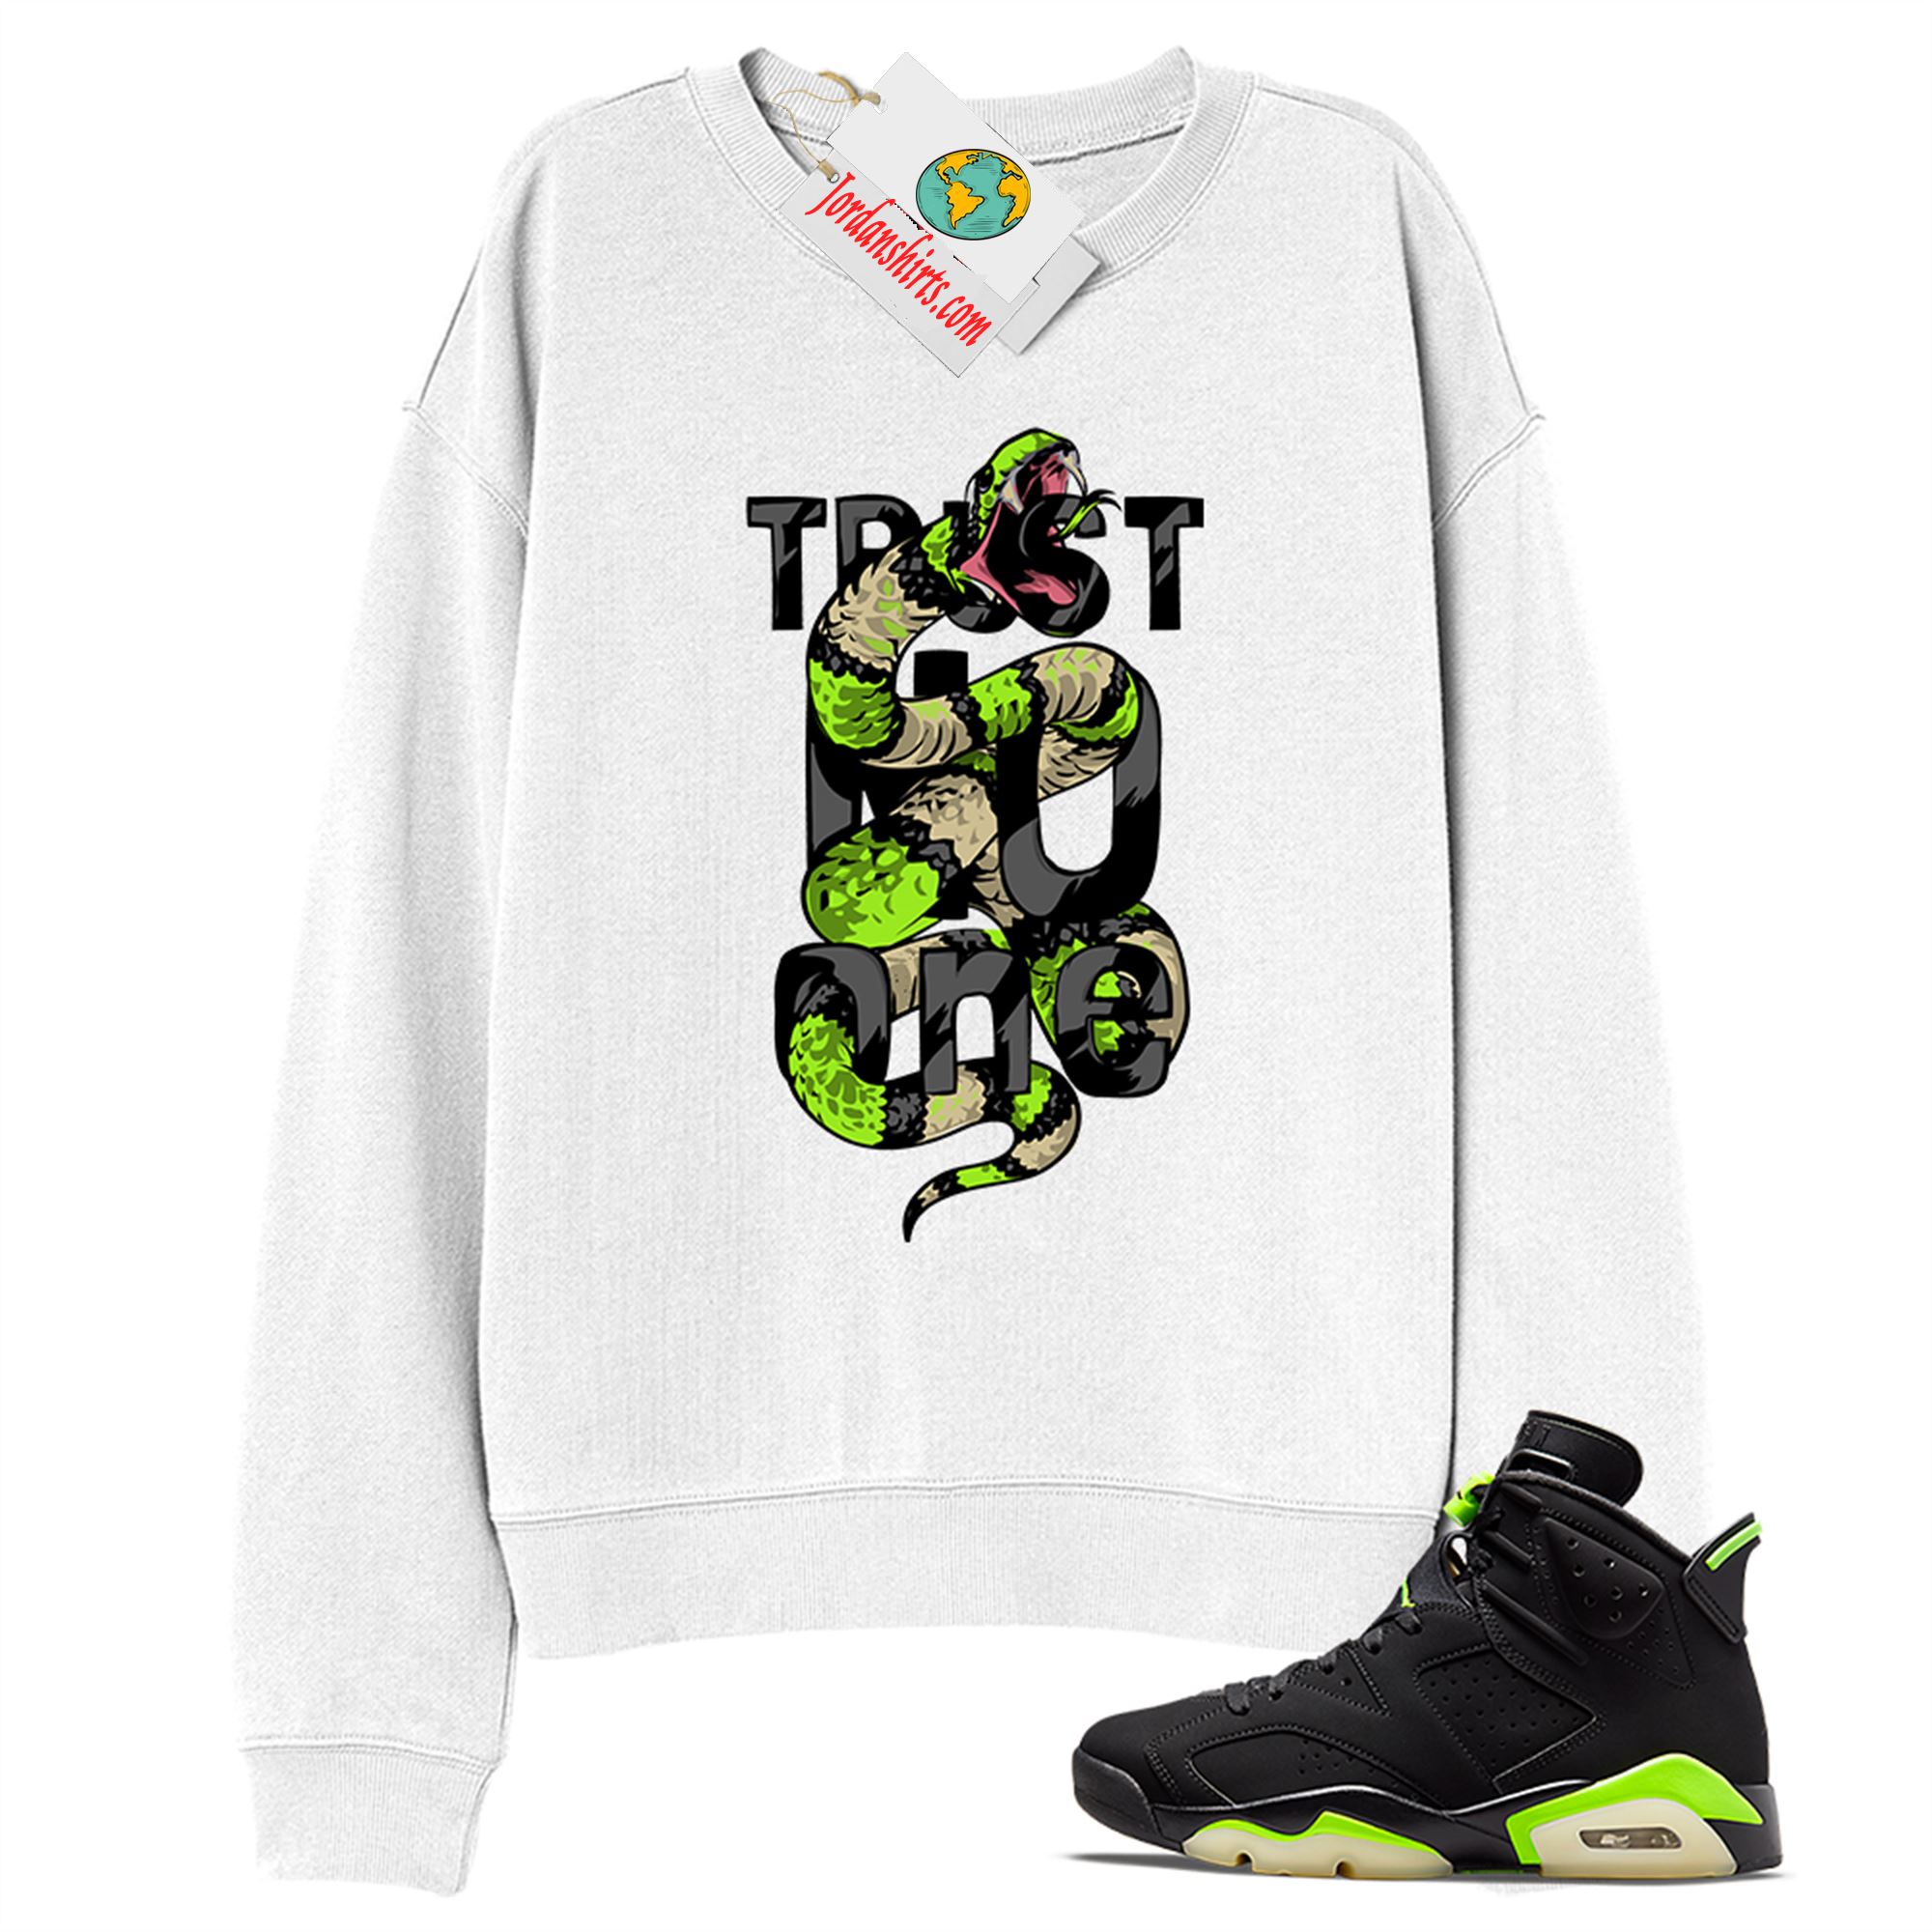 Jordan 6 Sweatshirt, Trust No One King Snake White Sweatshirt Air Jordan 6 Electric Green 6s Plus Size Up To 5xl